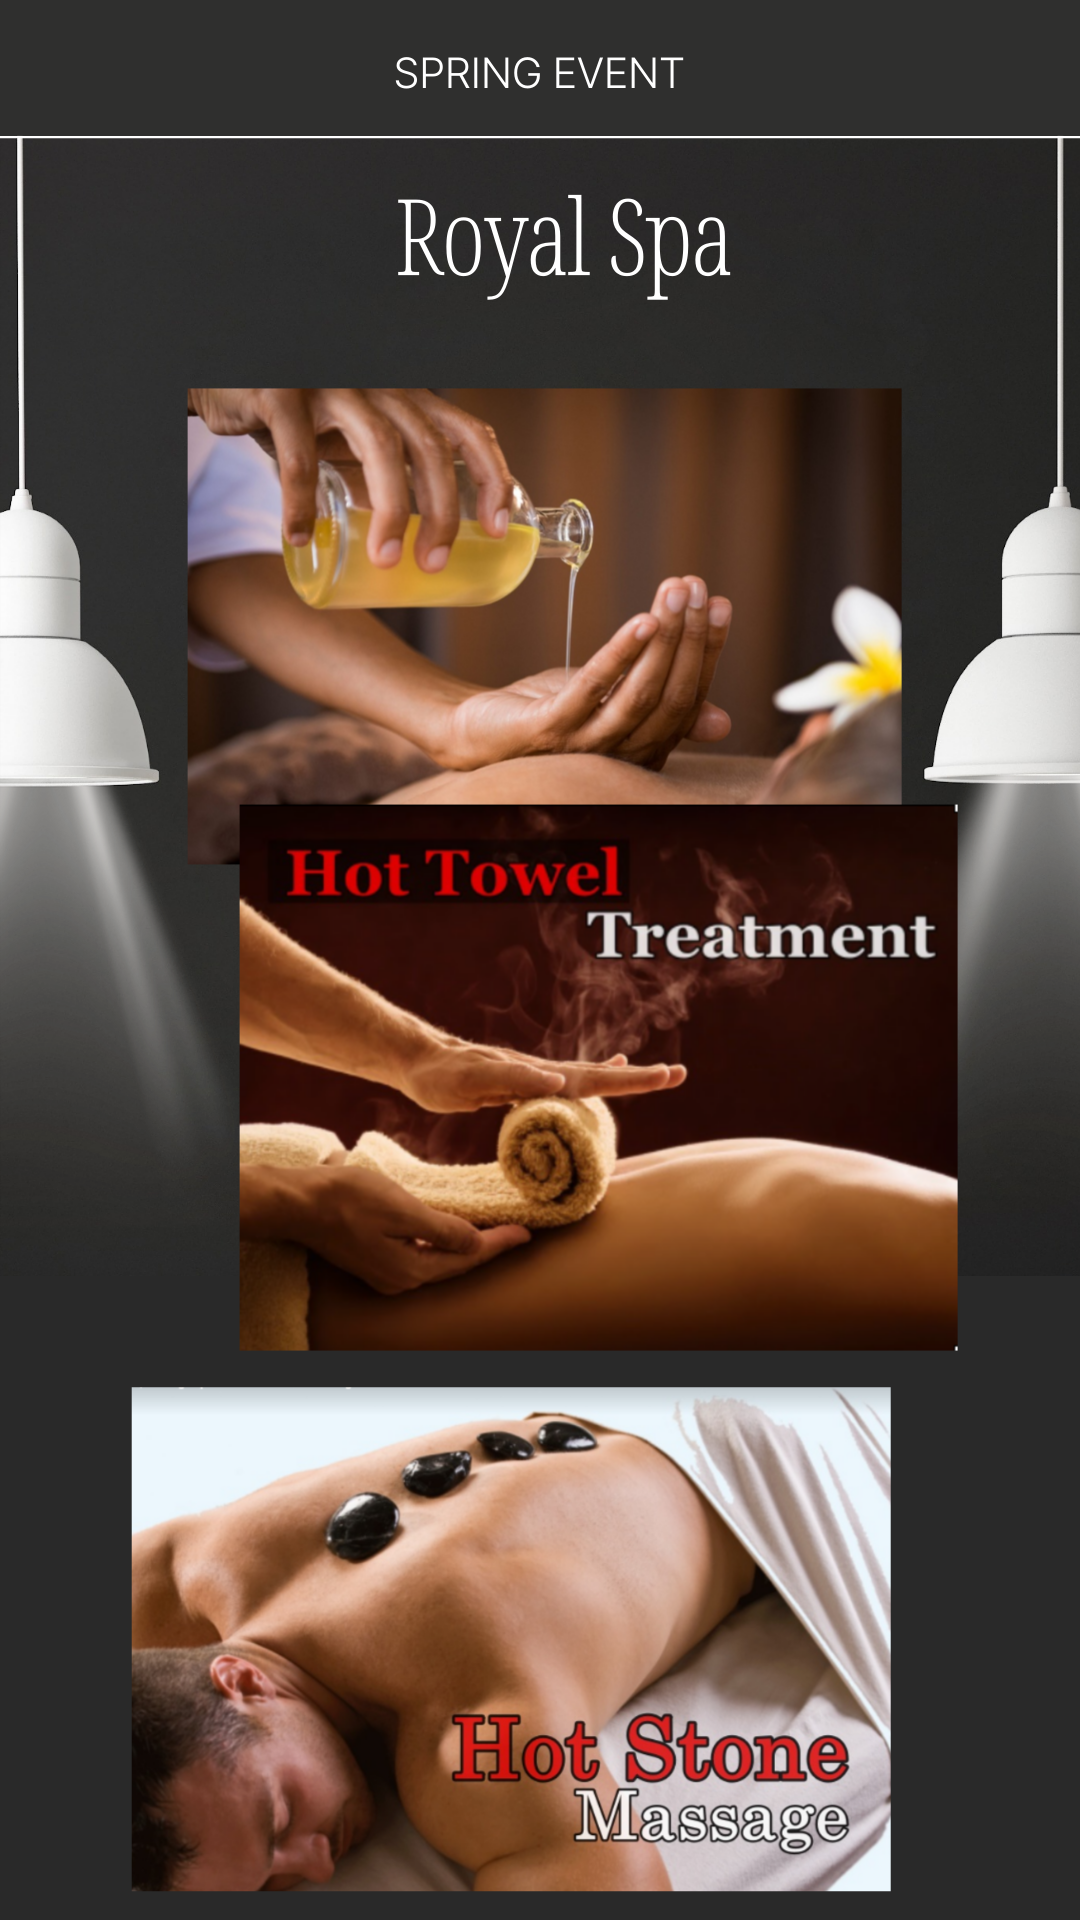 Royal Spa | Asian Massage Manville NJ - Massage Spa 500 S Main St, Manville New Jersey 08835